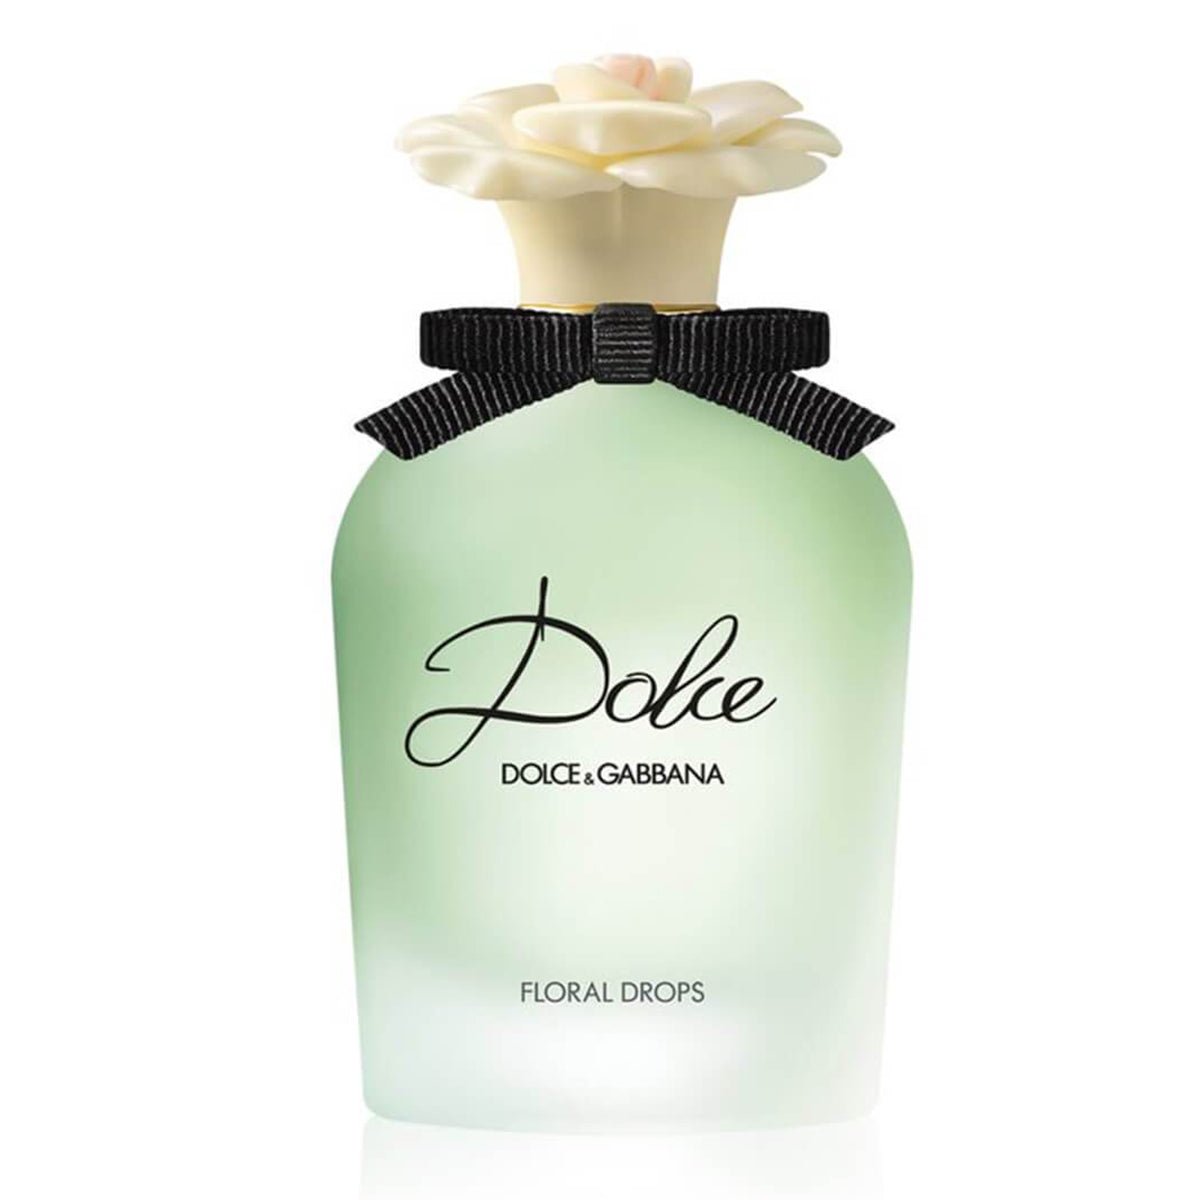 Dolce & Gabbana Dolce Floral Drops Spray Edt For Women 75ml-Perfume - AllurebeautypkDolce & Gabbana Dolce Floral Drops Spray Edt For Women 75ml-Perfume